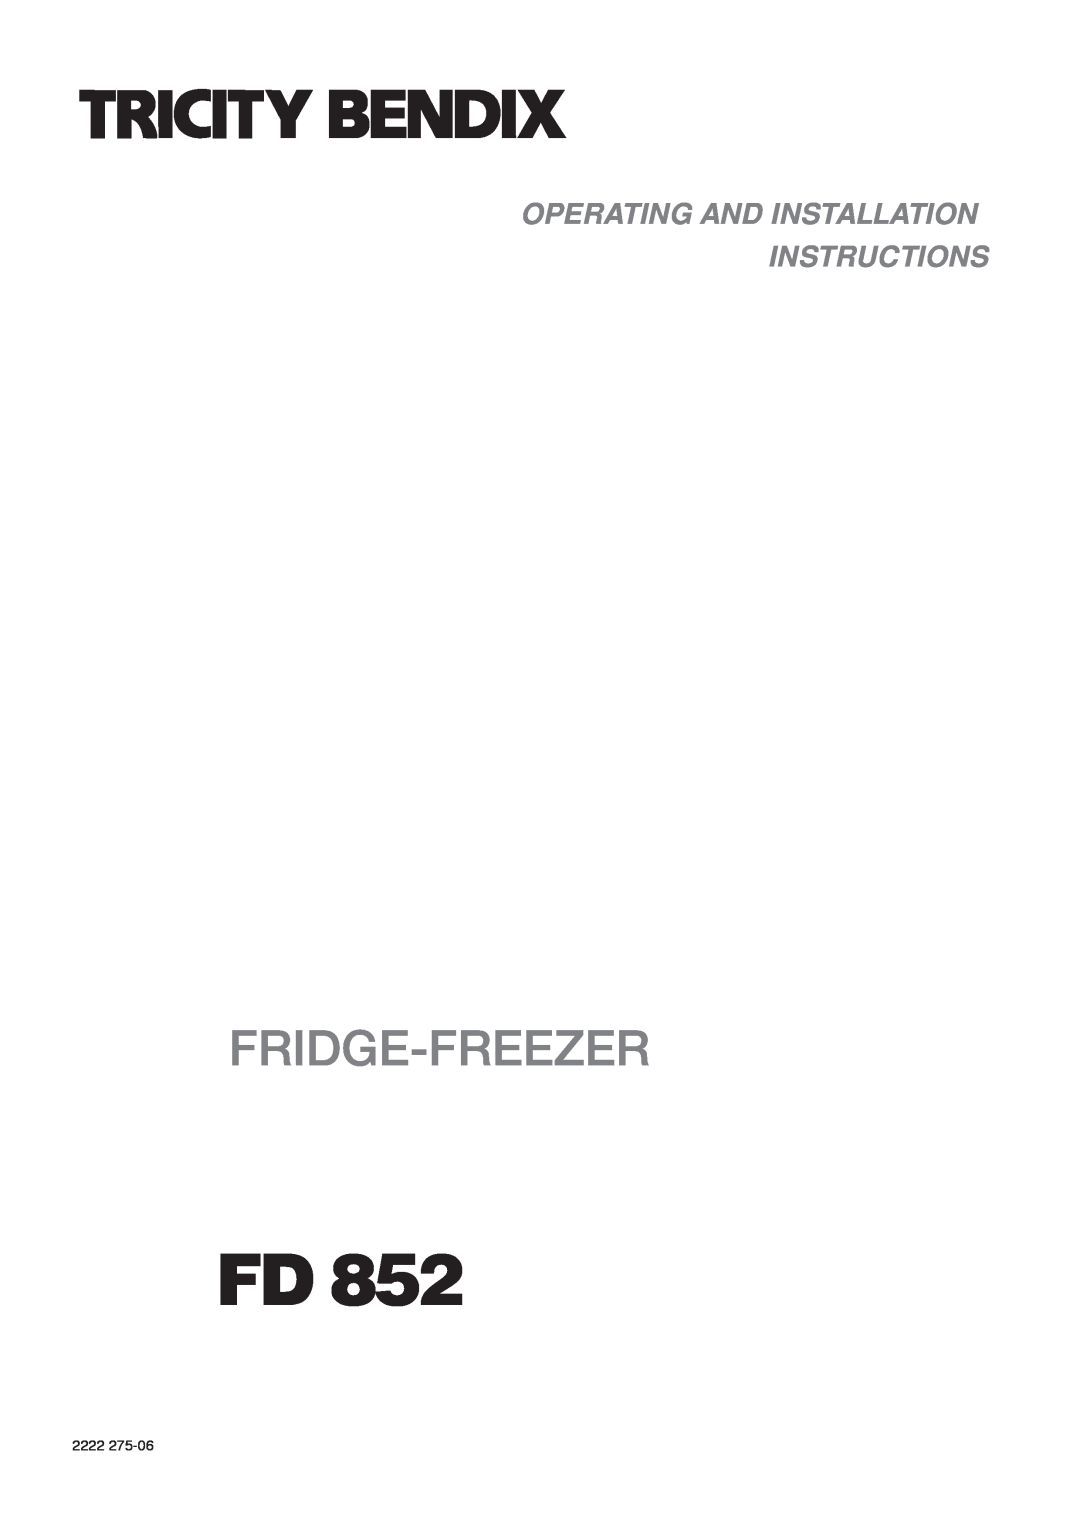 Tricity Bendix FD 852 installation instructions Fridge-Freezer, Operating And Installation Instructions, 2222 